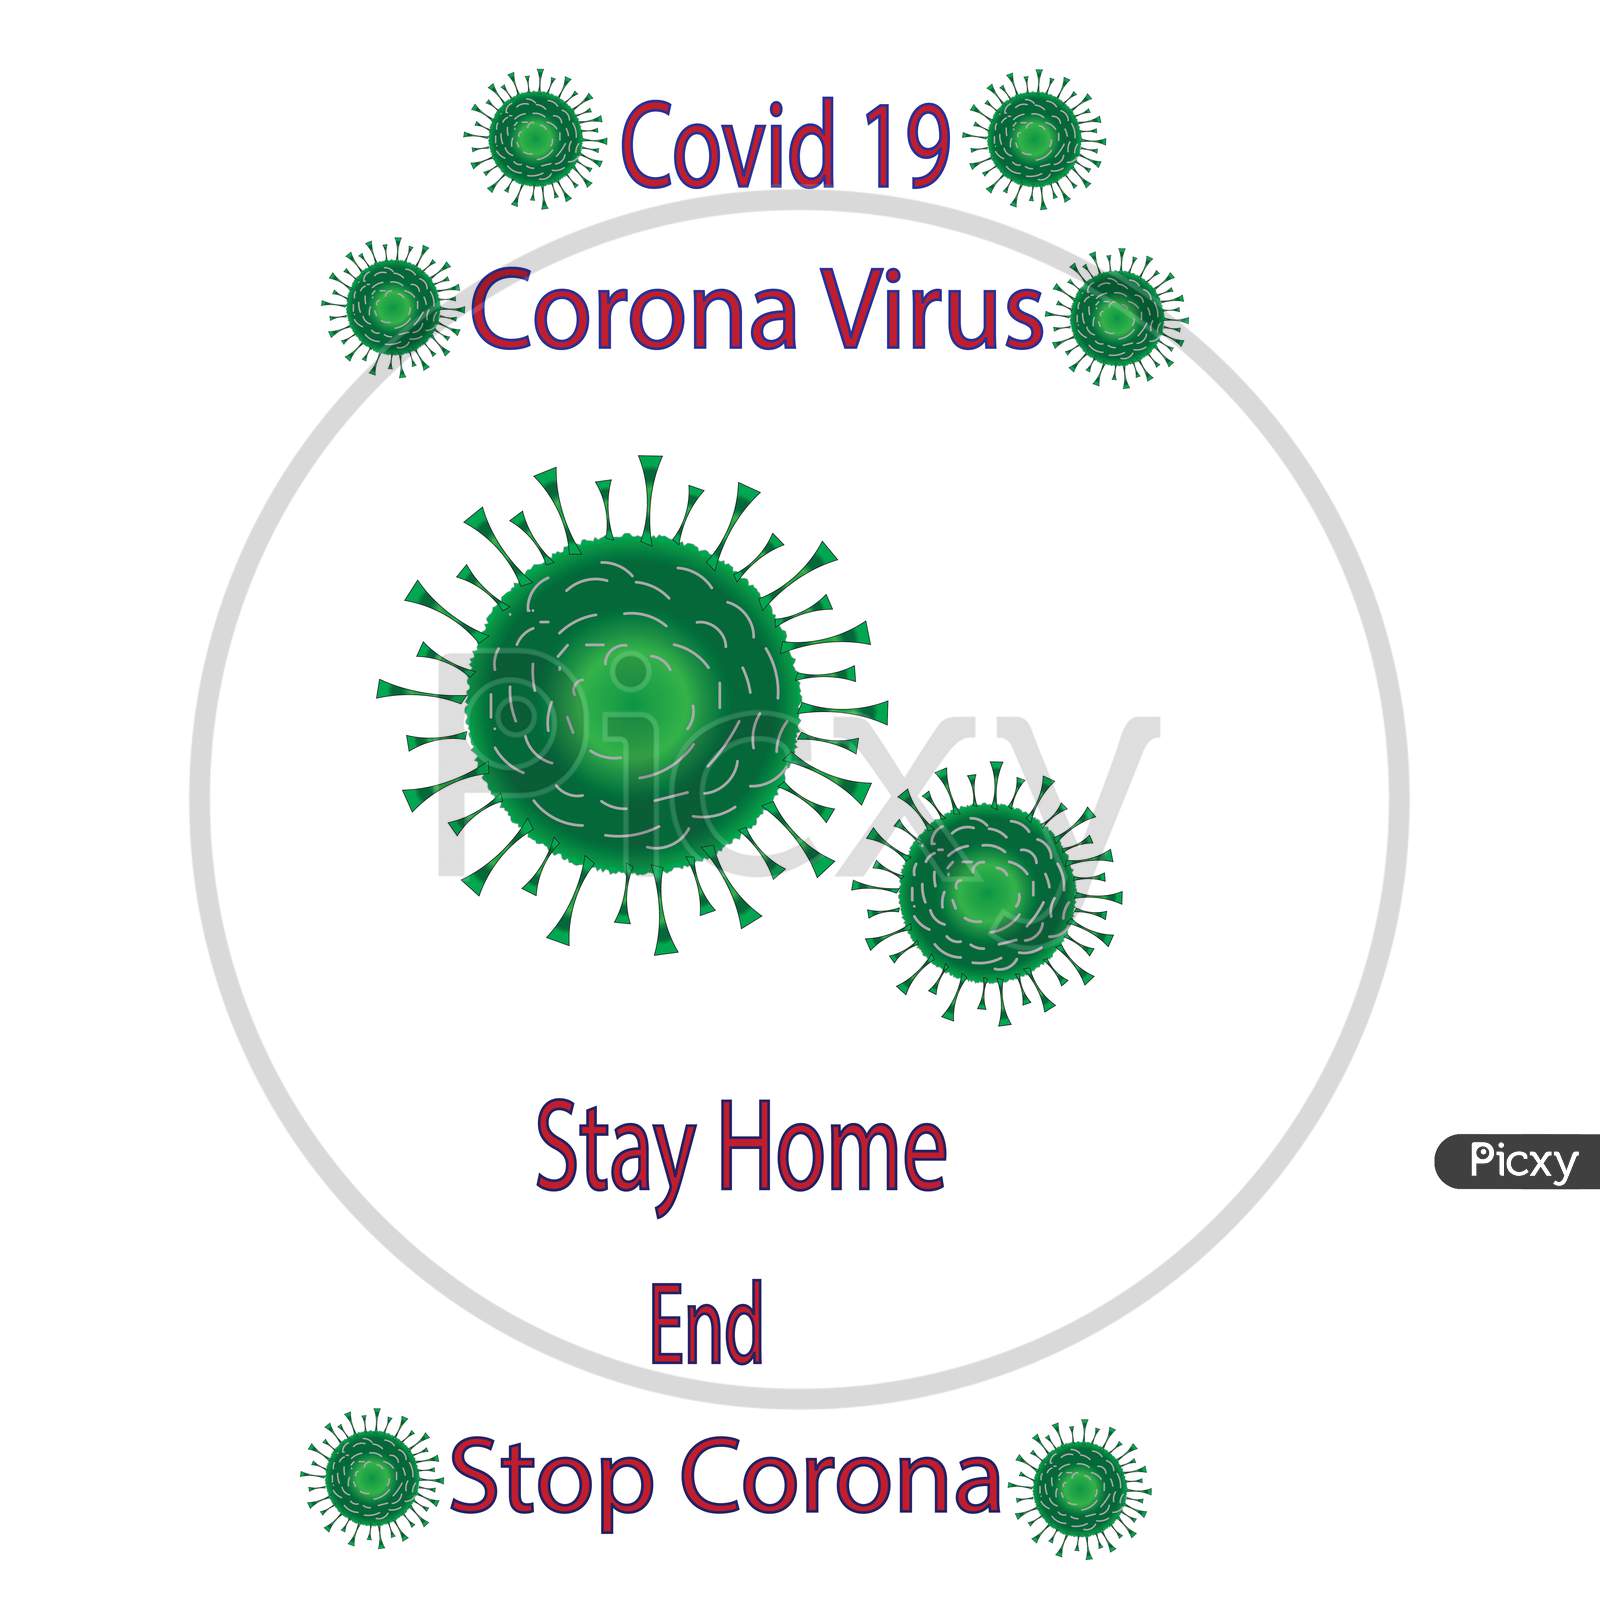 Covid 19 Corona virus design